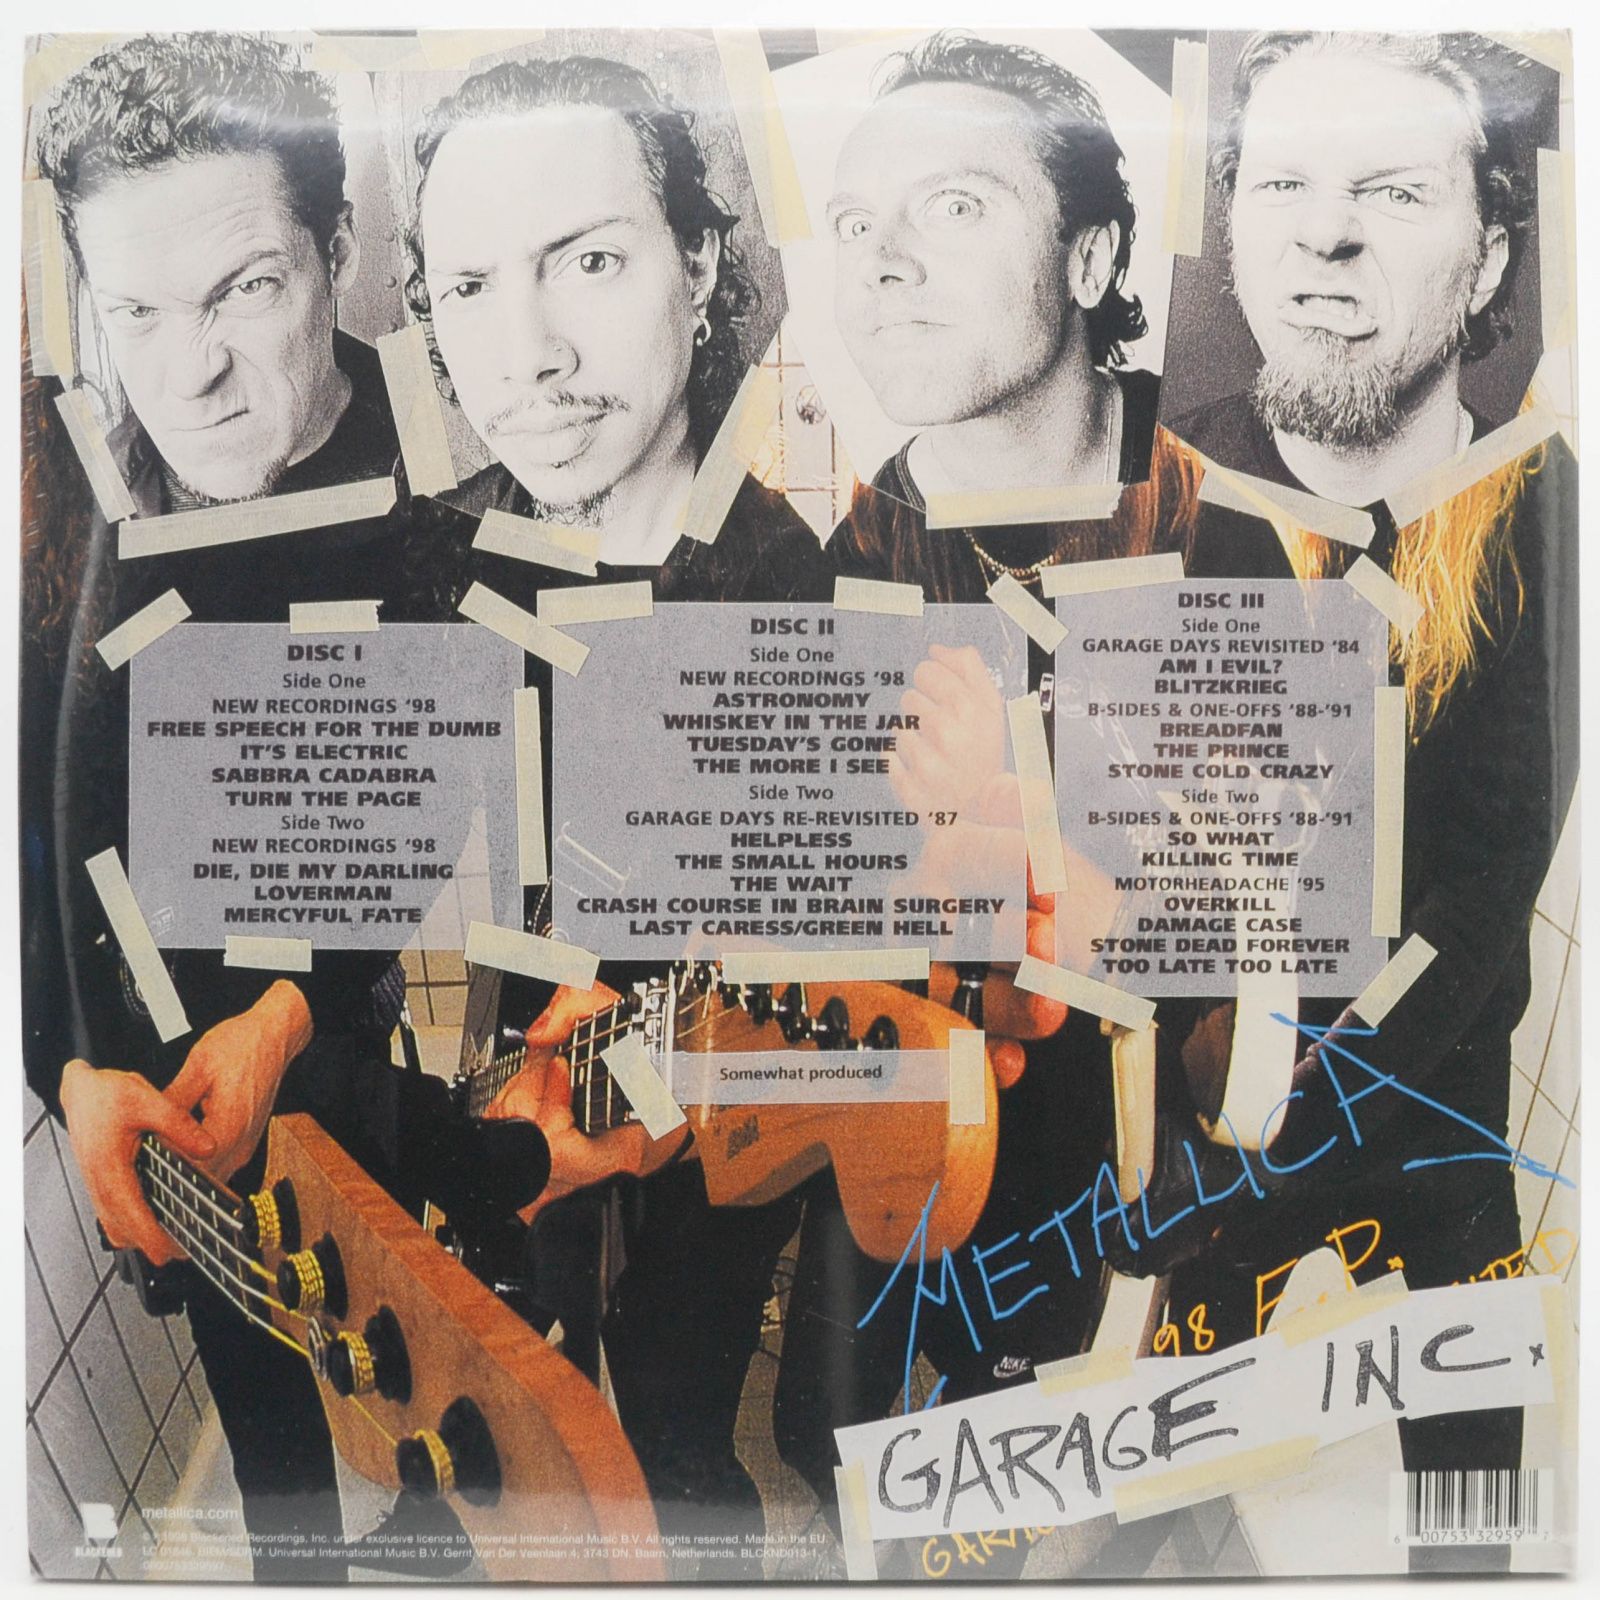 Metallica — Garage Inc. (3LP), 1998